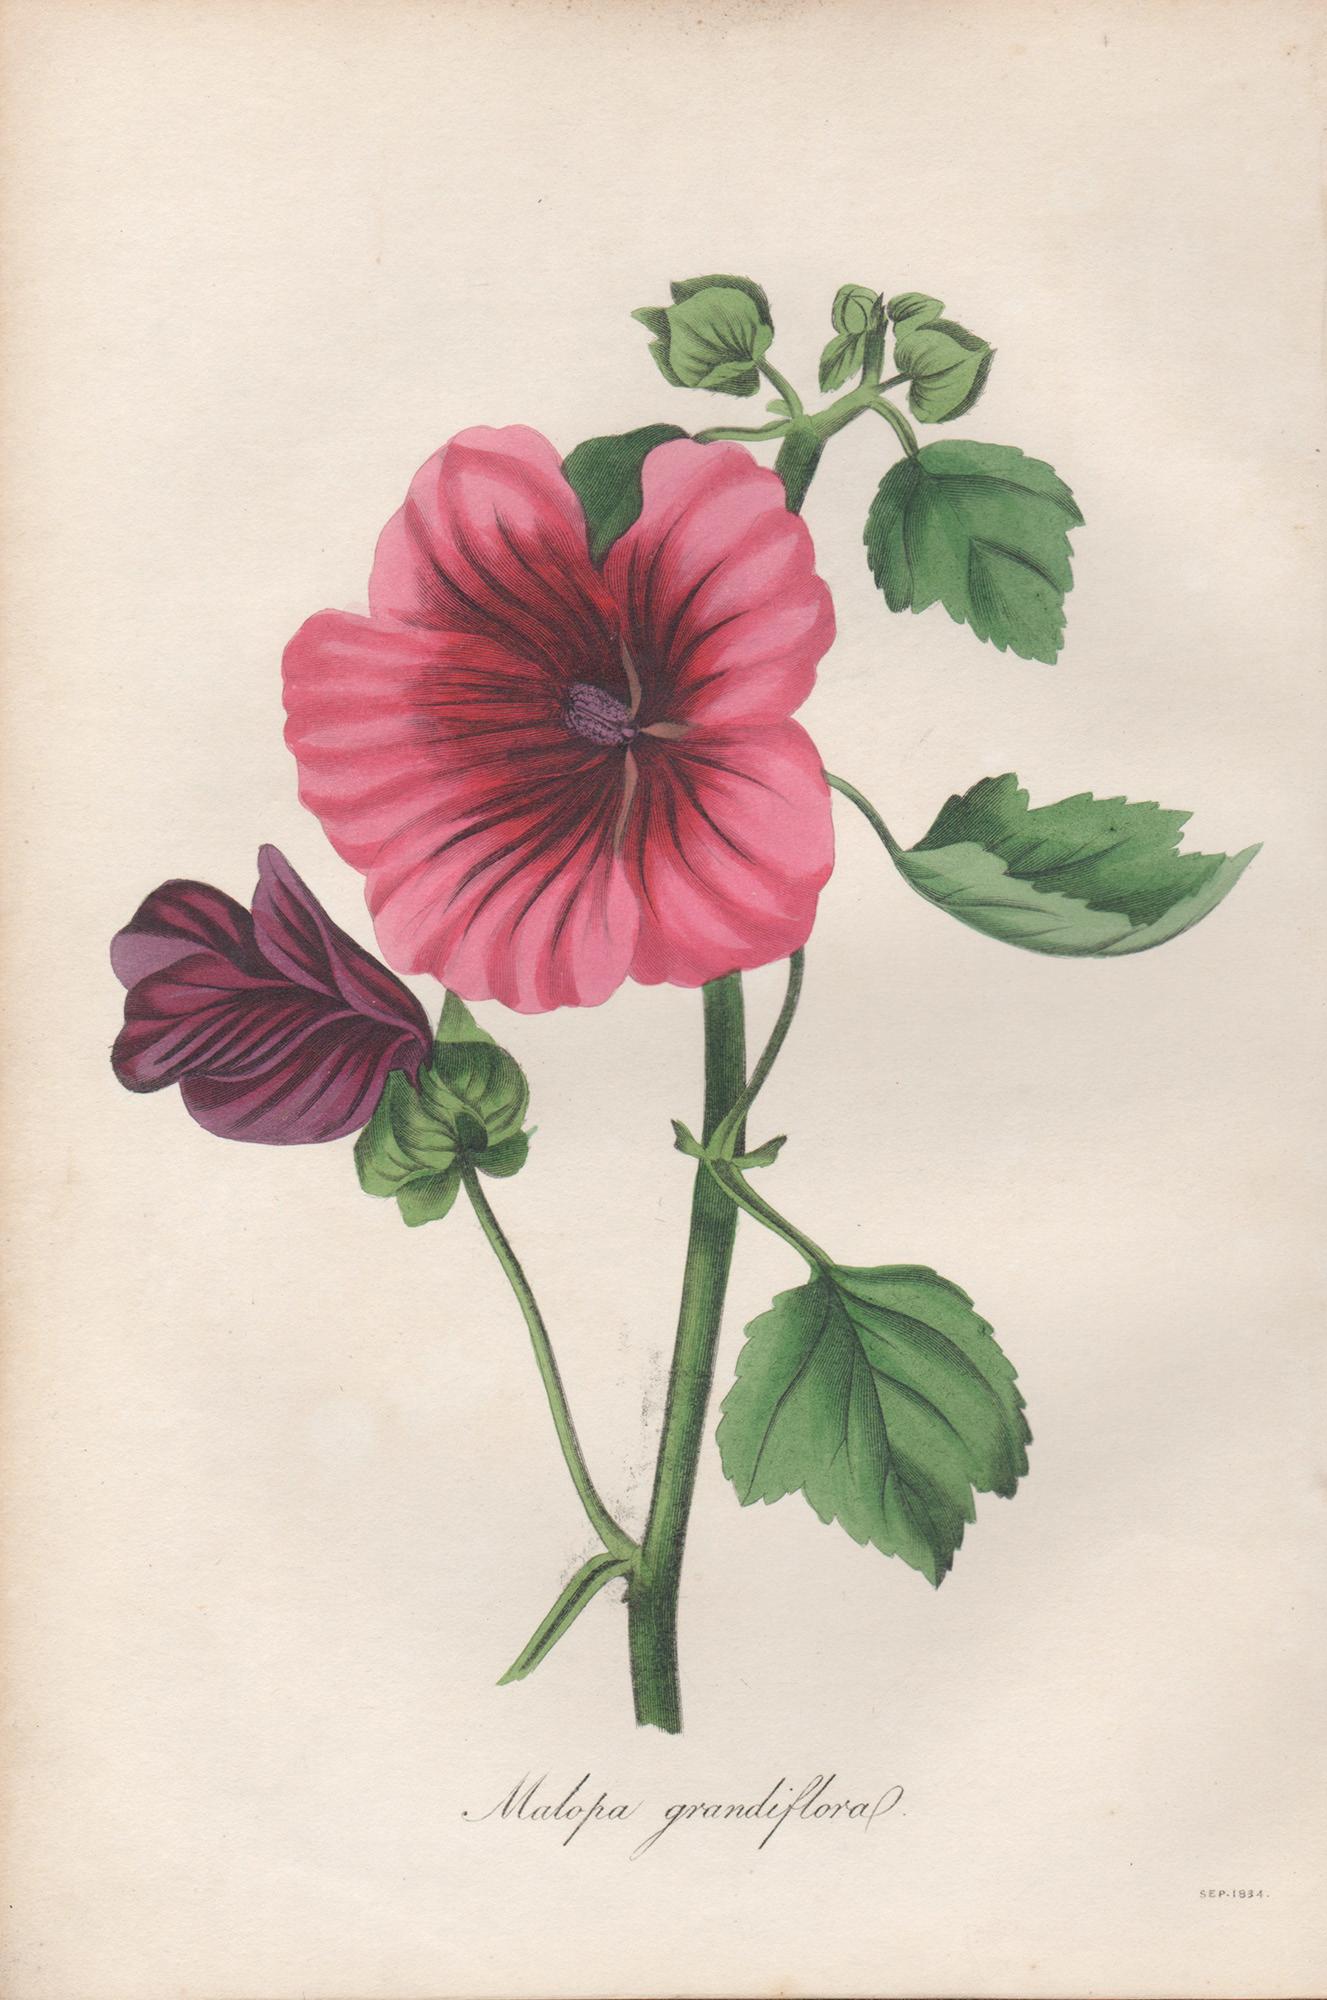 Frederick William Smith Print - Malopa grandiflora, antique botanical flower engraving